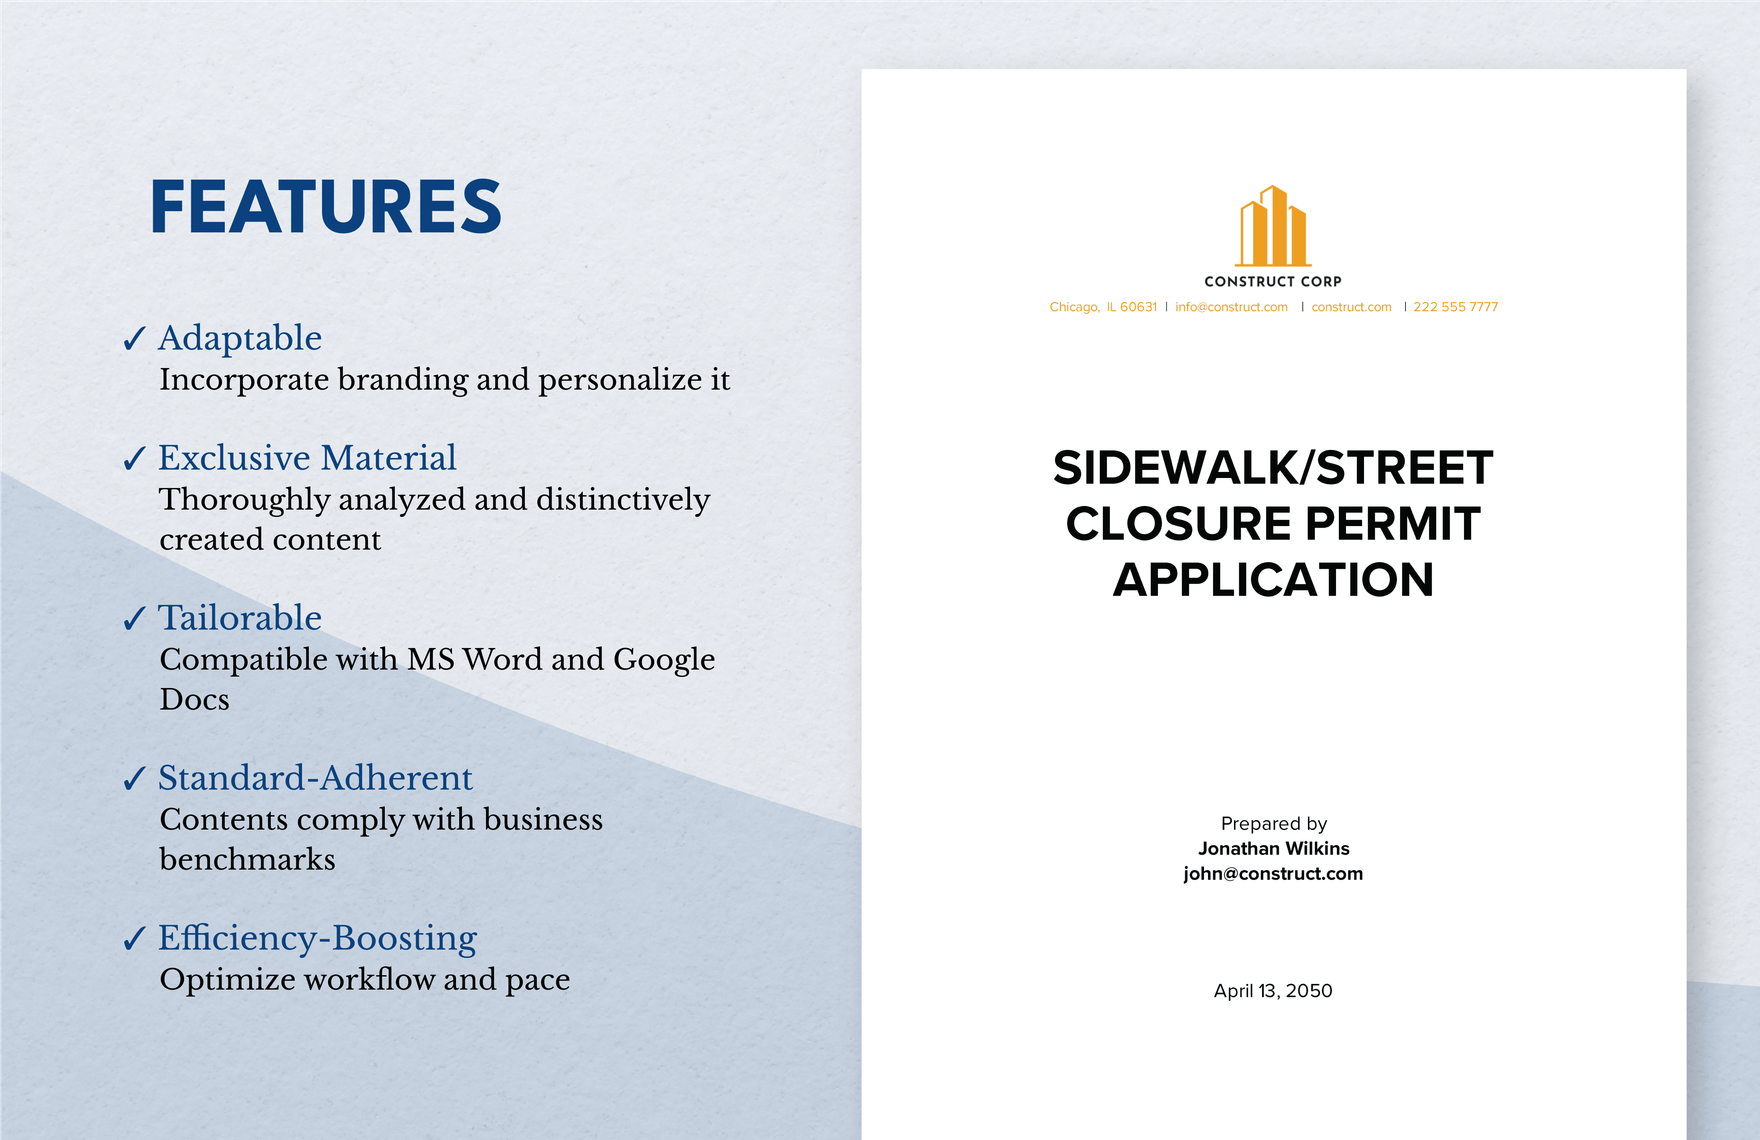 Sidewalk/Street Closure Permit Application